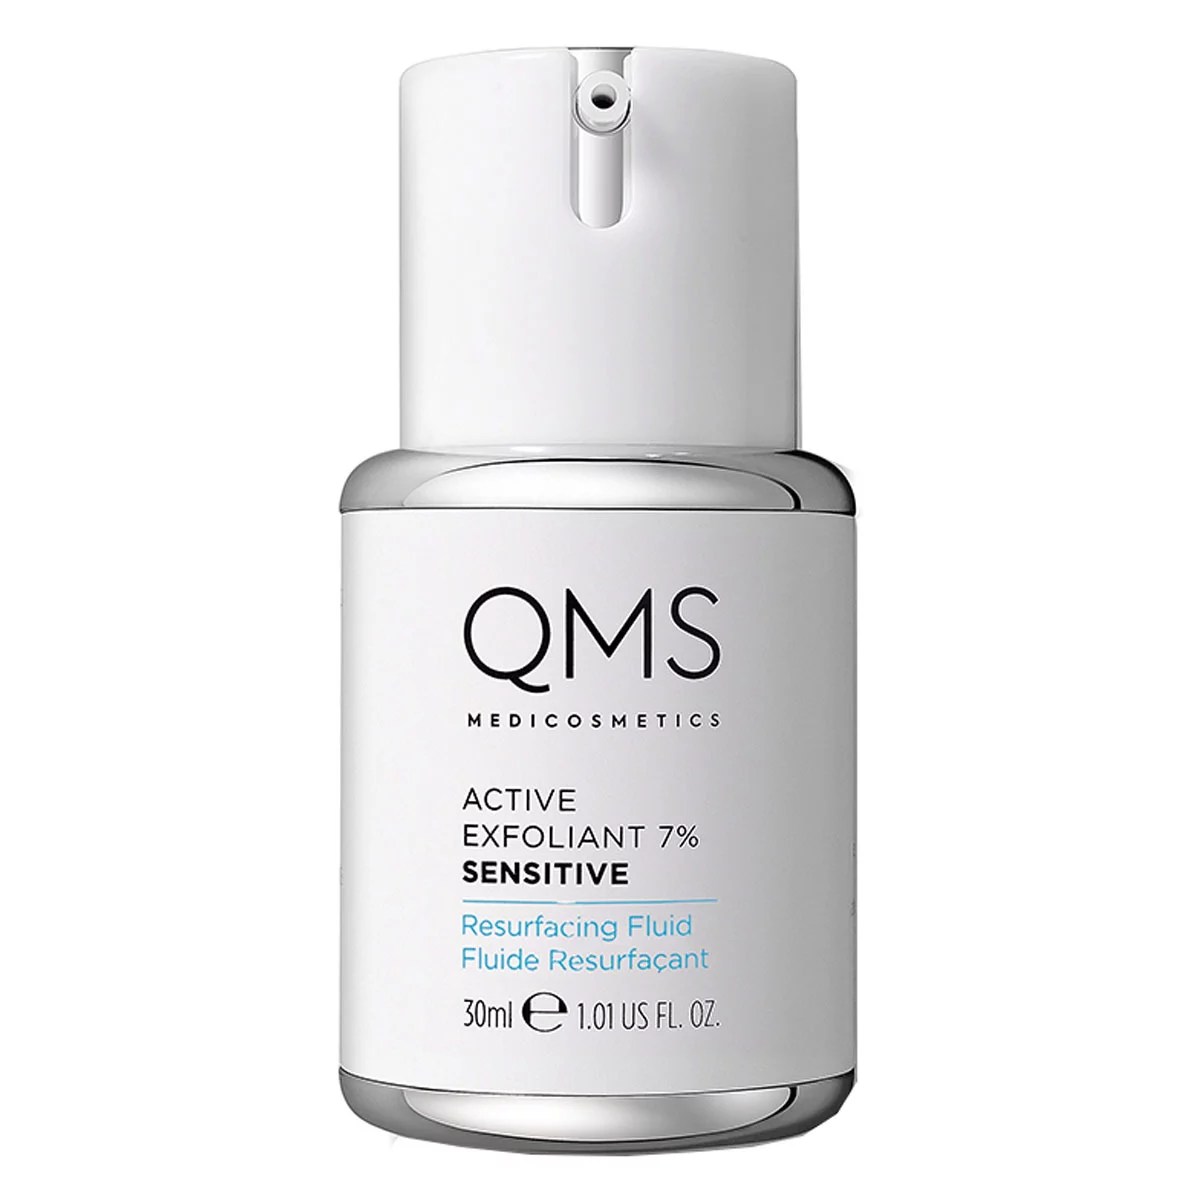 a bottle of qms active exfoliant seven percent exfoliator for sensitive skin